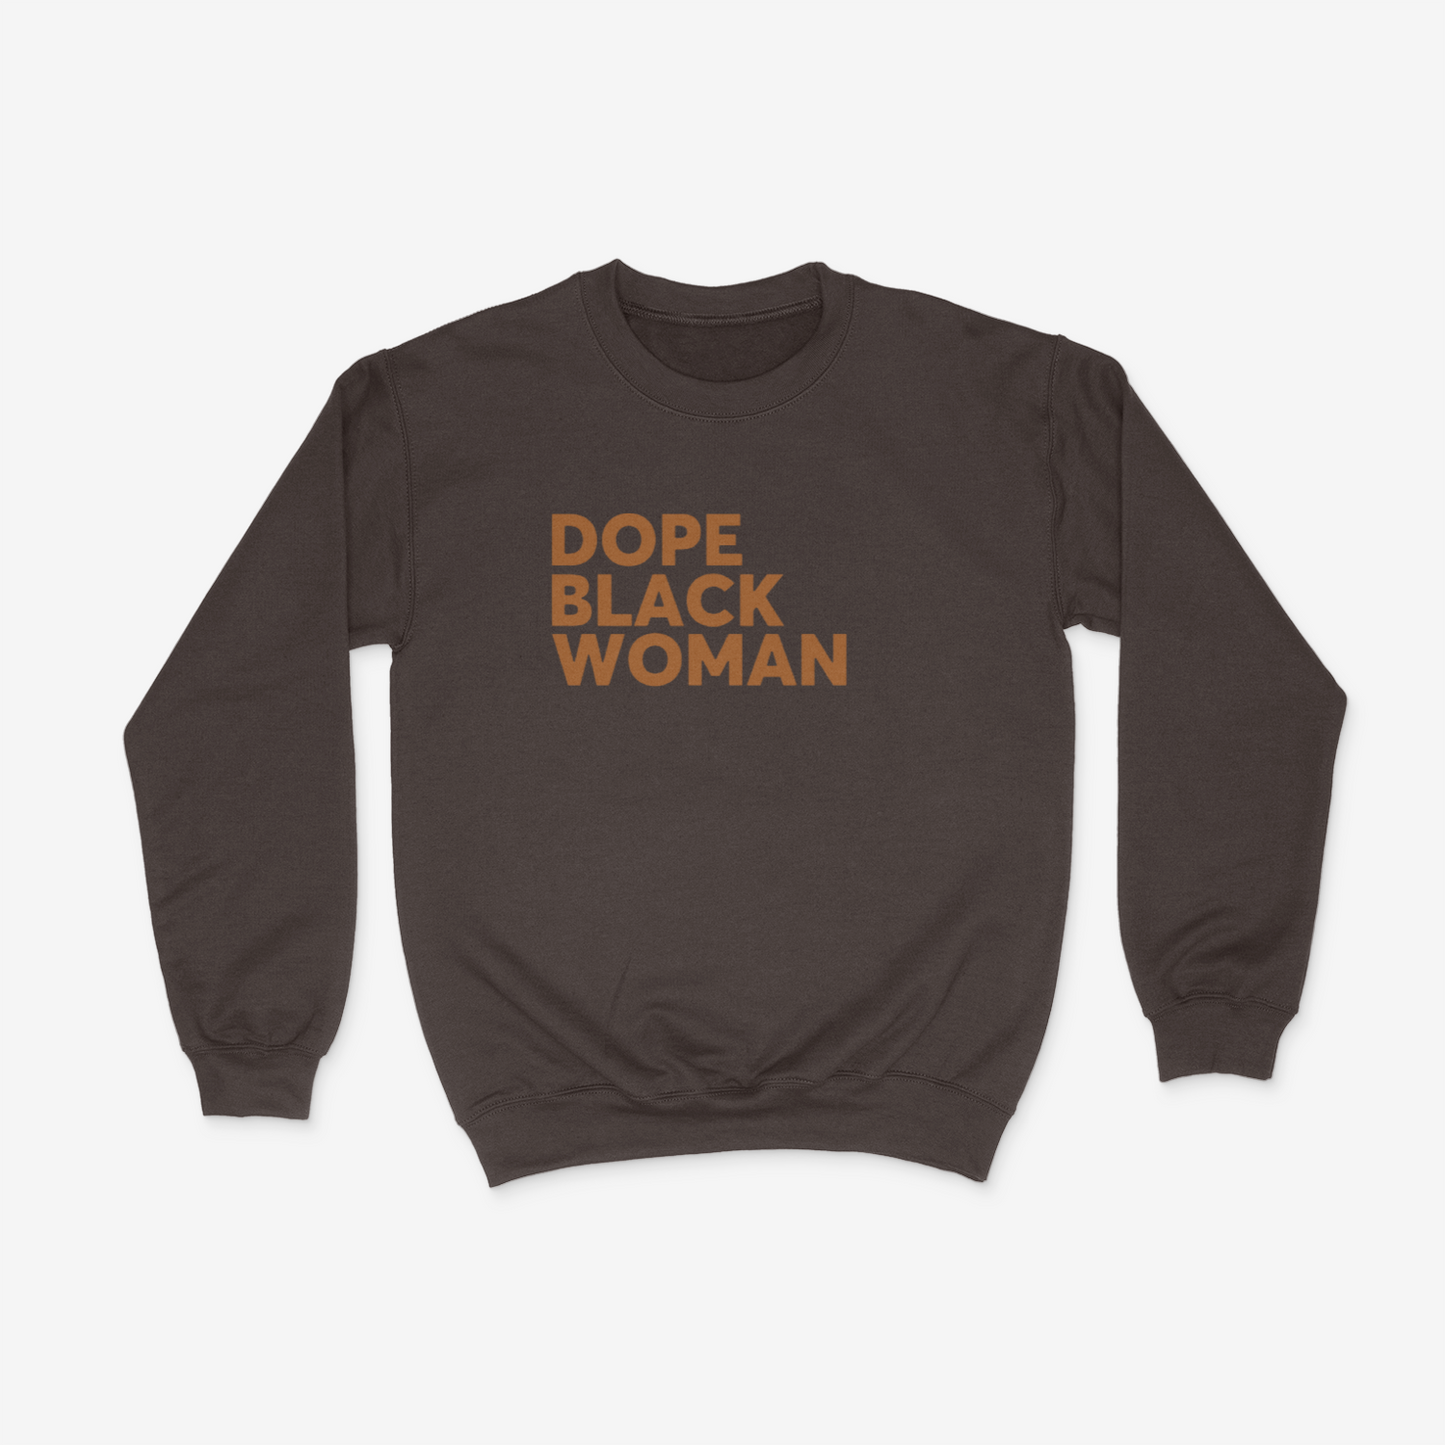 Dope Black Woman Crew ( Light Brown)